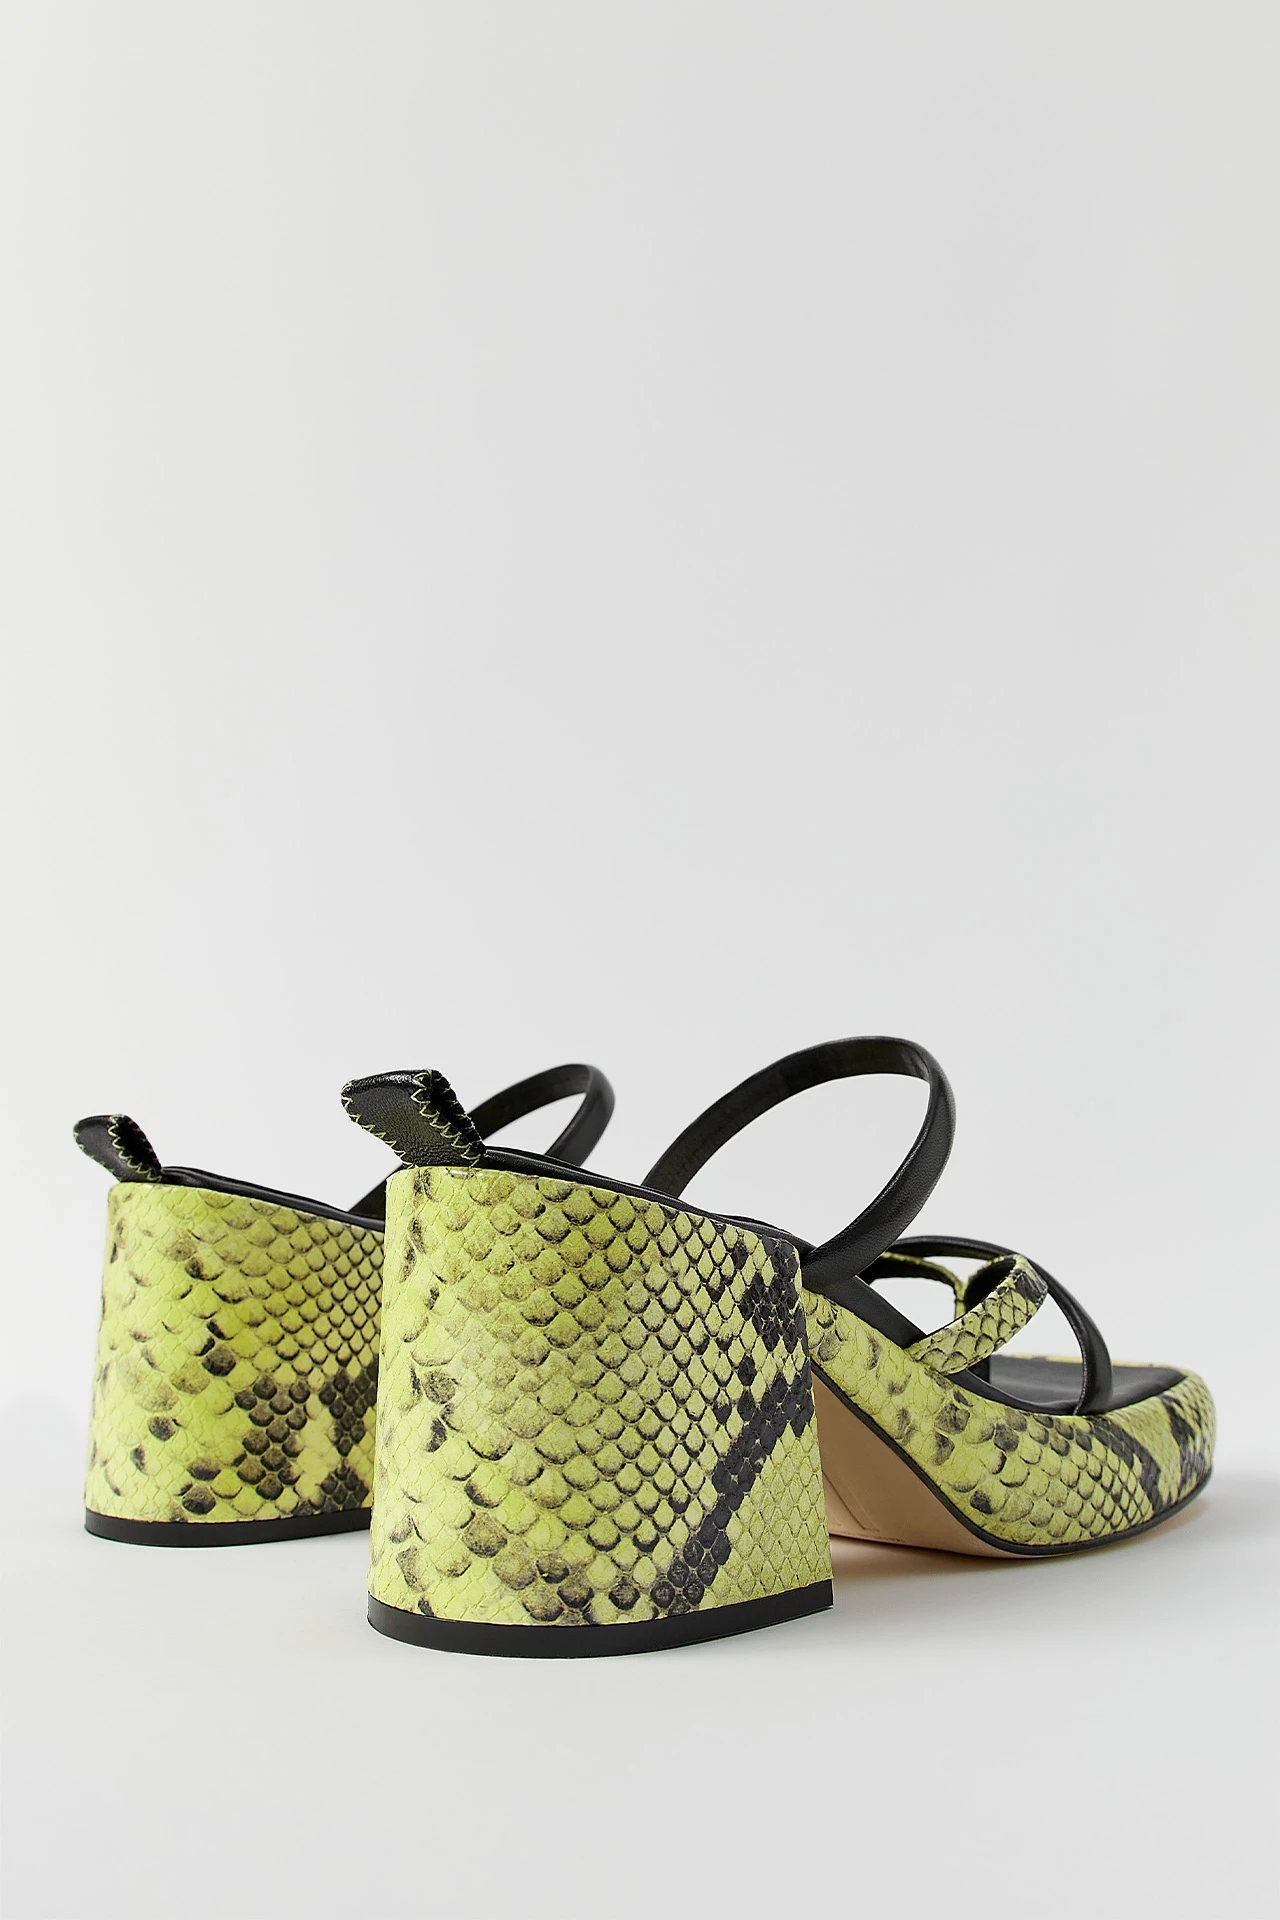 Miista-delphine-yellow-sandals-03